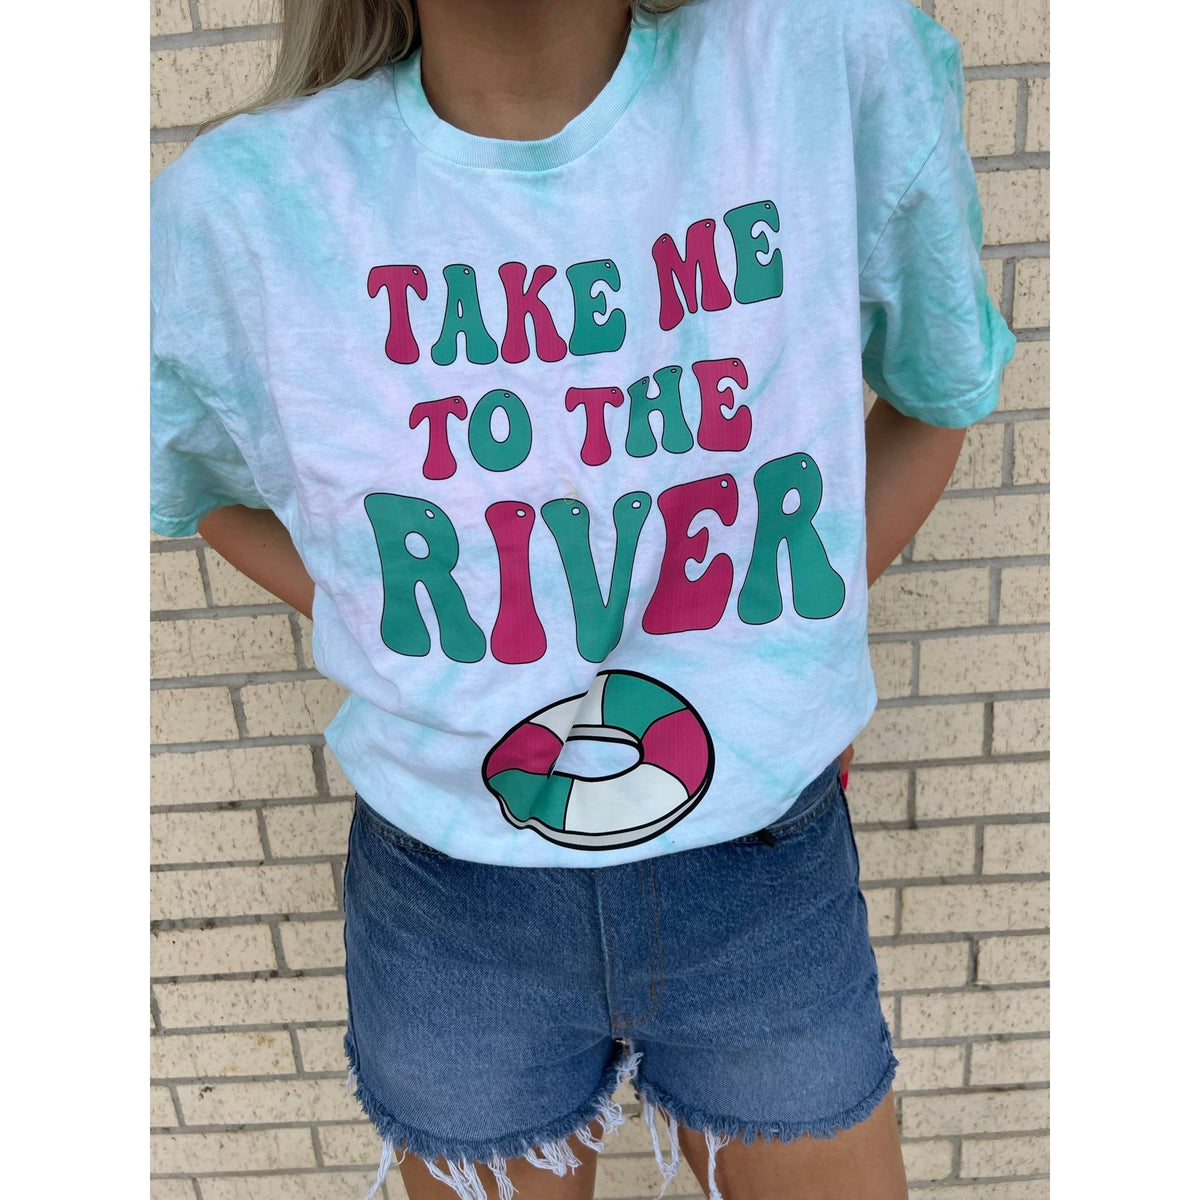 Take me to the river